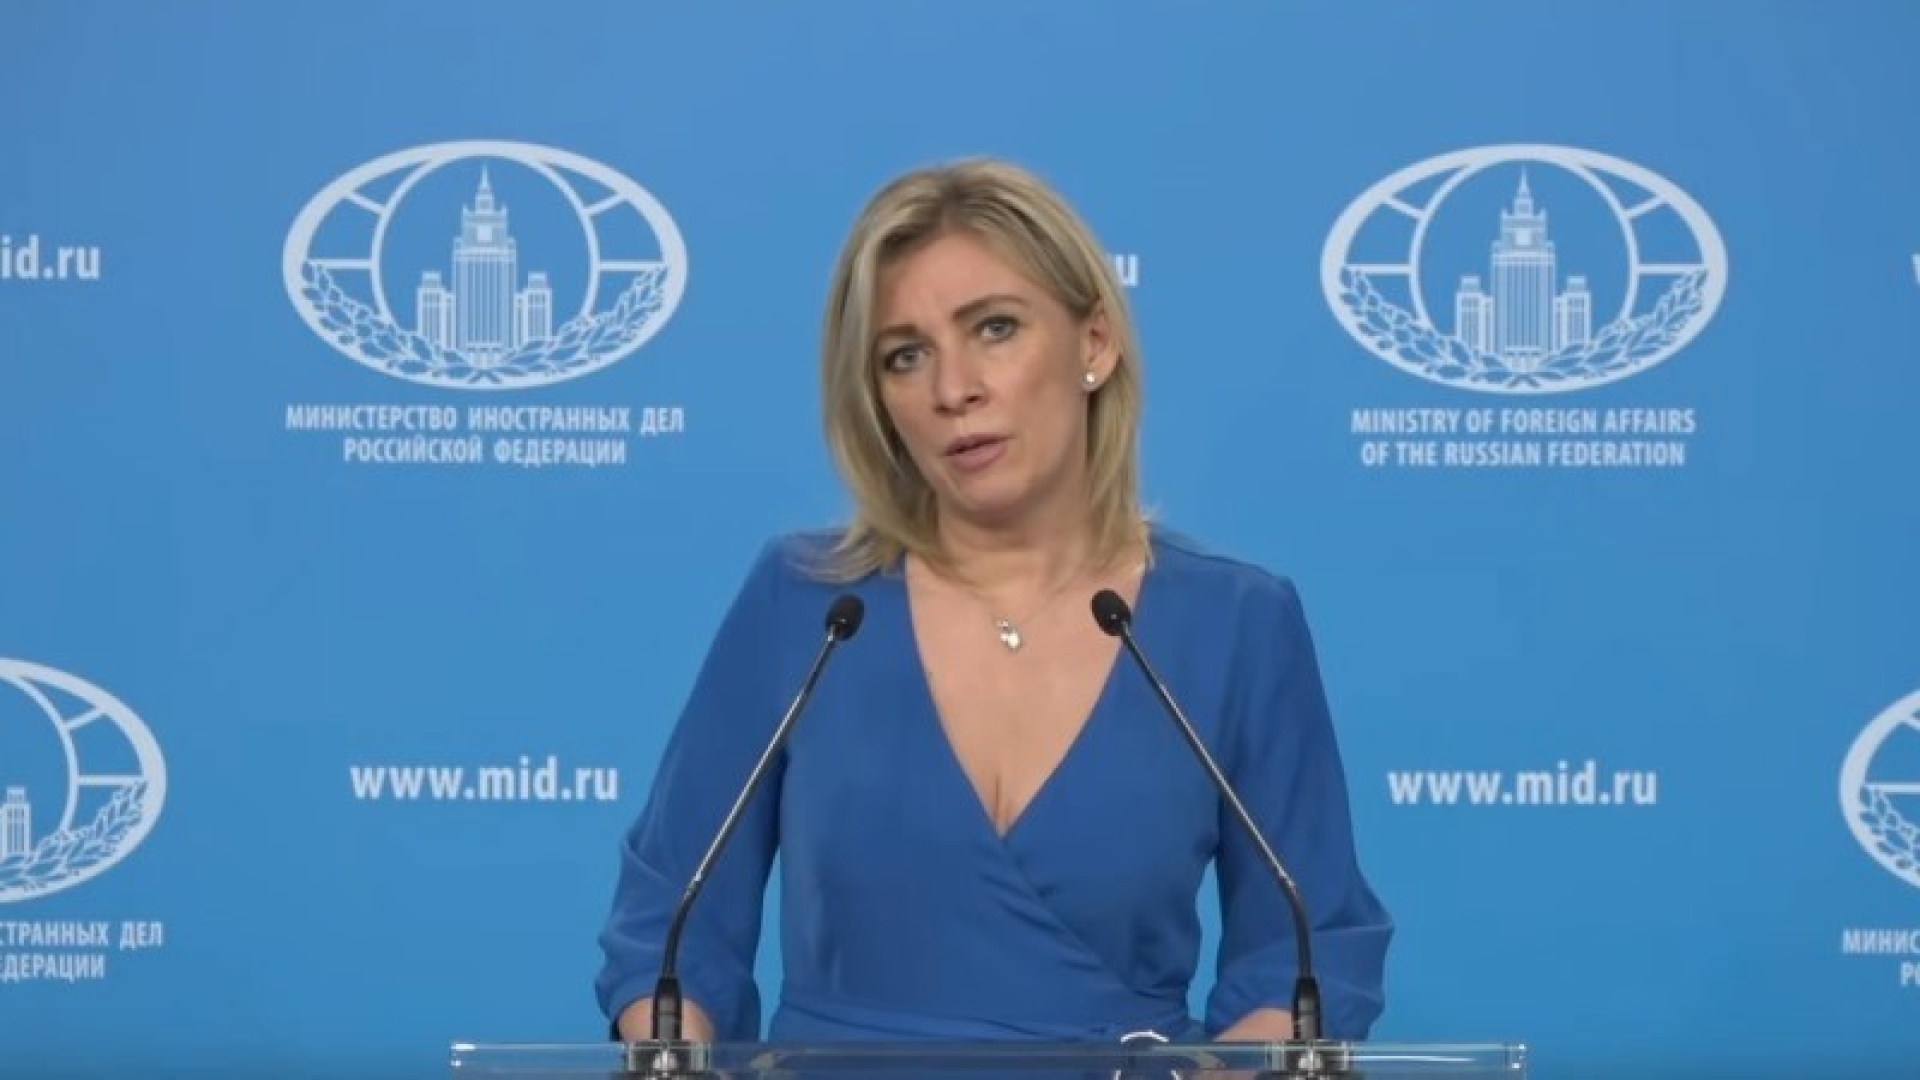 Maria Zakharova: the policy of sanctions failed